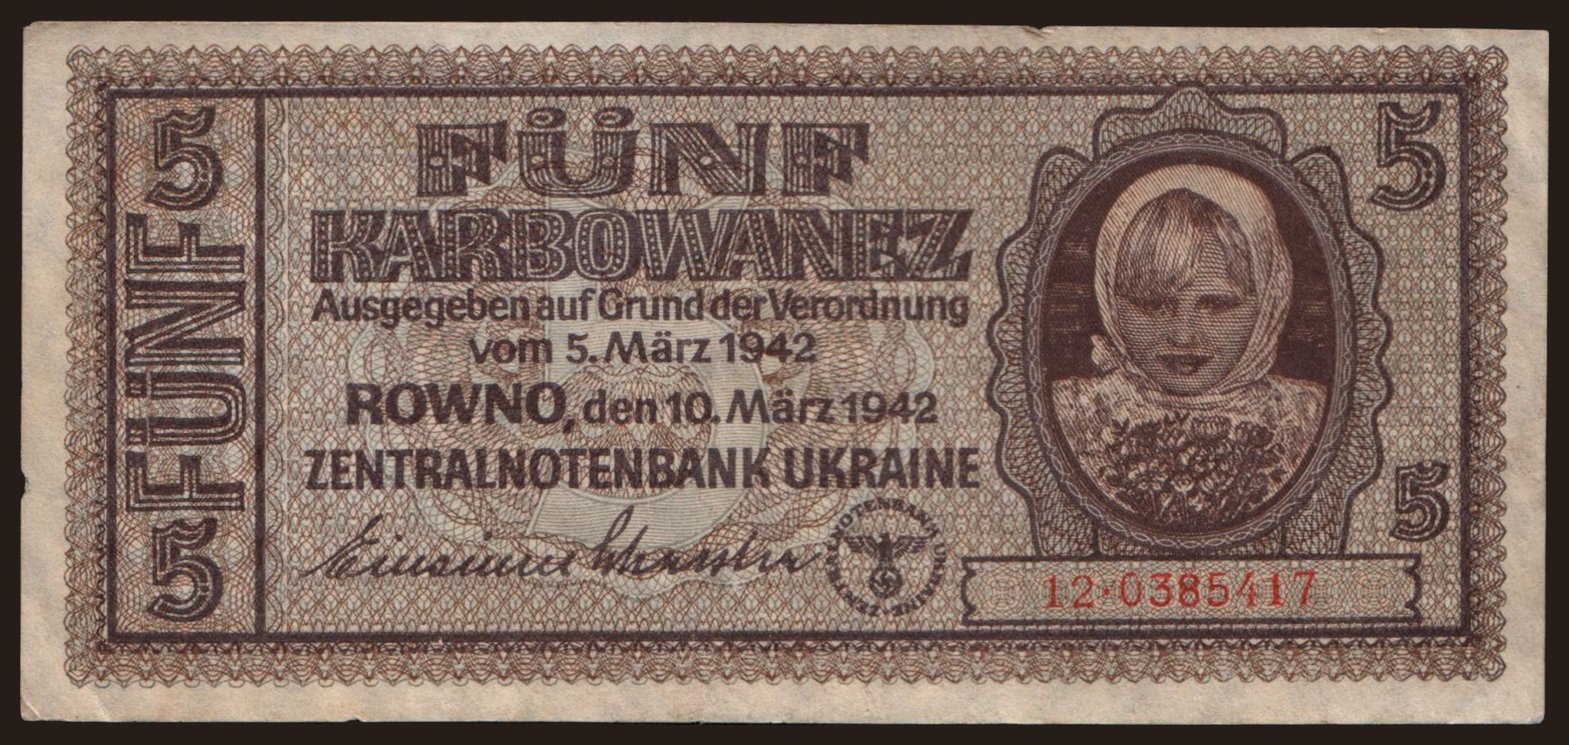 5 karbowanez, 1942